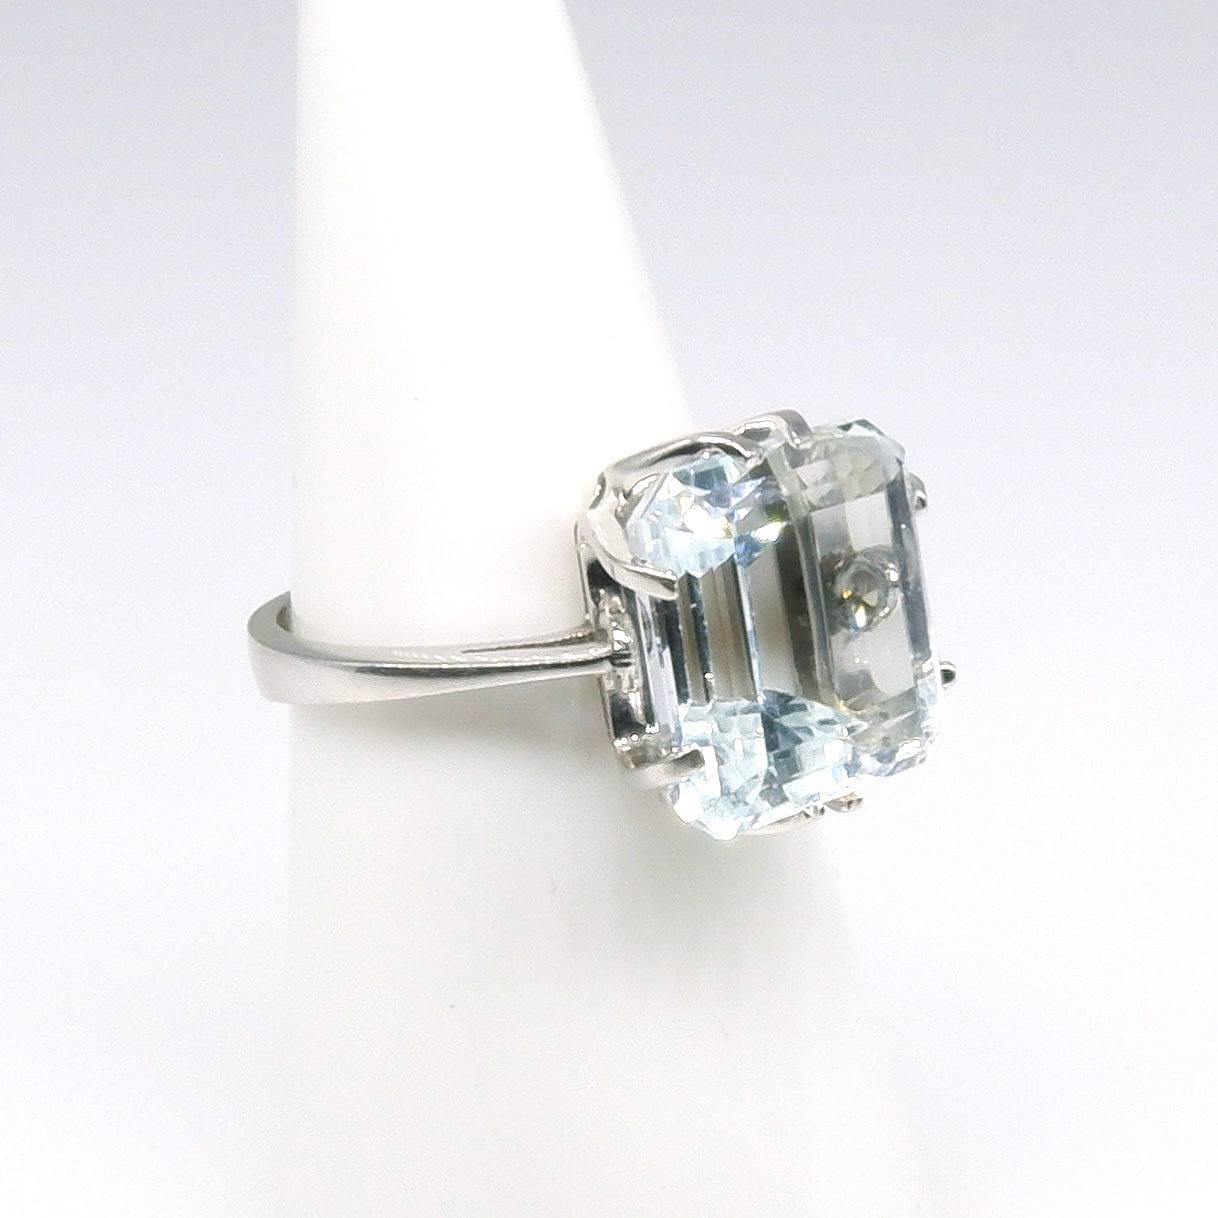 '18ct White Gold and Square Emerald Cut Pale Aquamarine Ring'